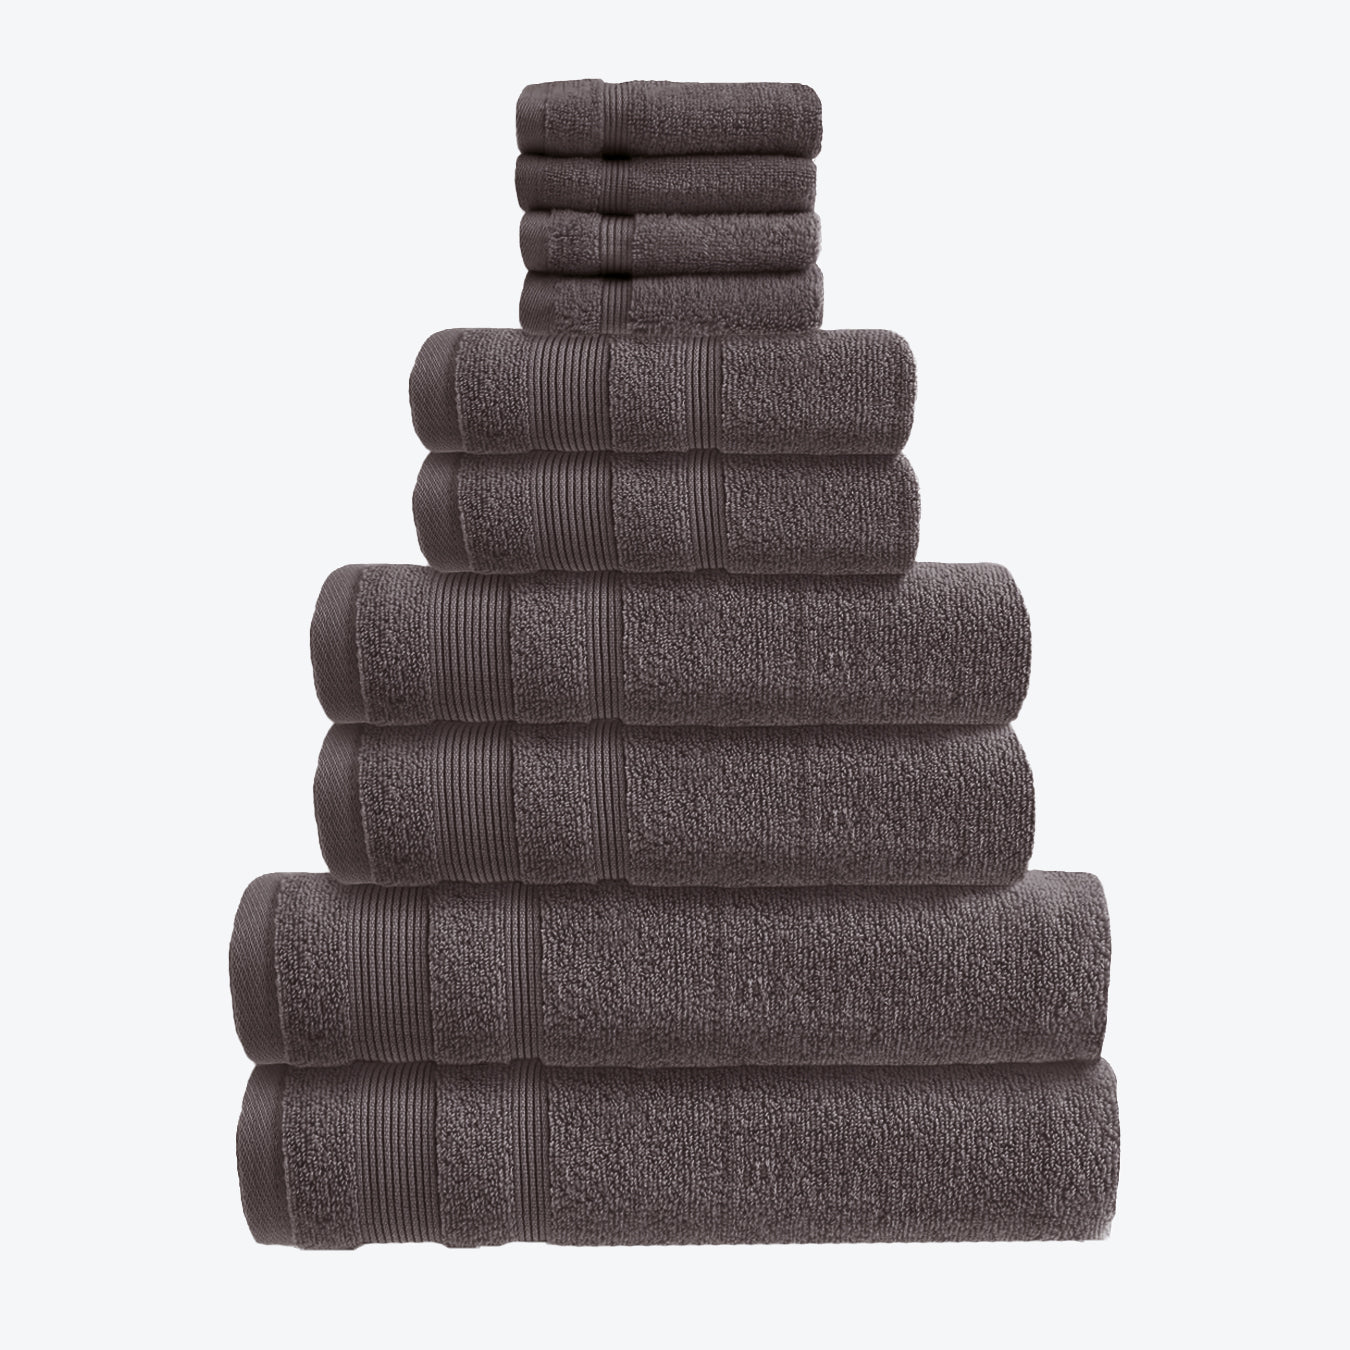 Charcoal Grey Zero Twist 10pc Towel Set Egyptian Cotton Bathroom Towel Bale. Hand Towels, Bath Towels, Bath Sheets, and Face Cloths